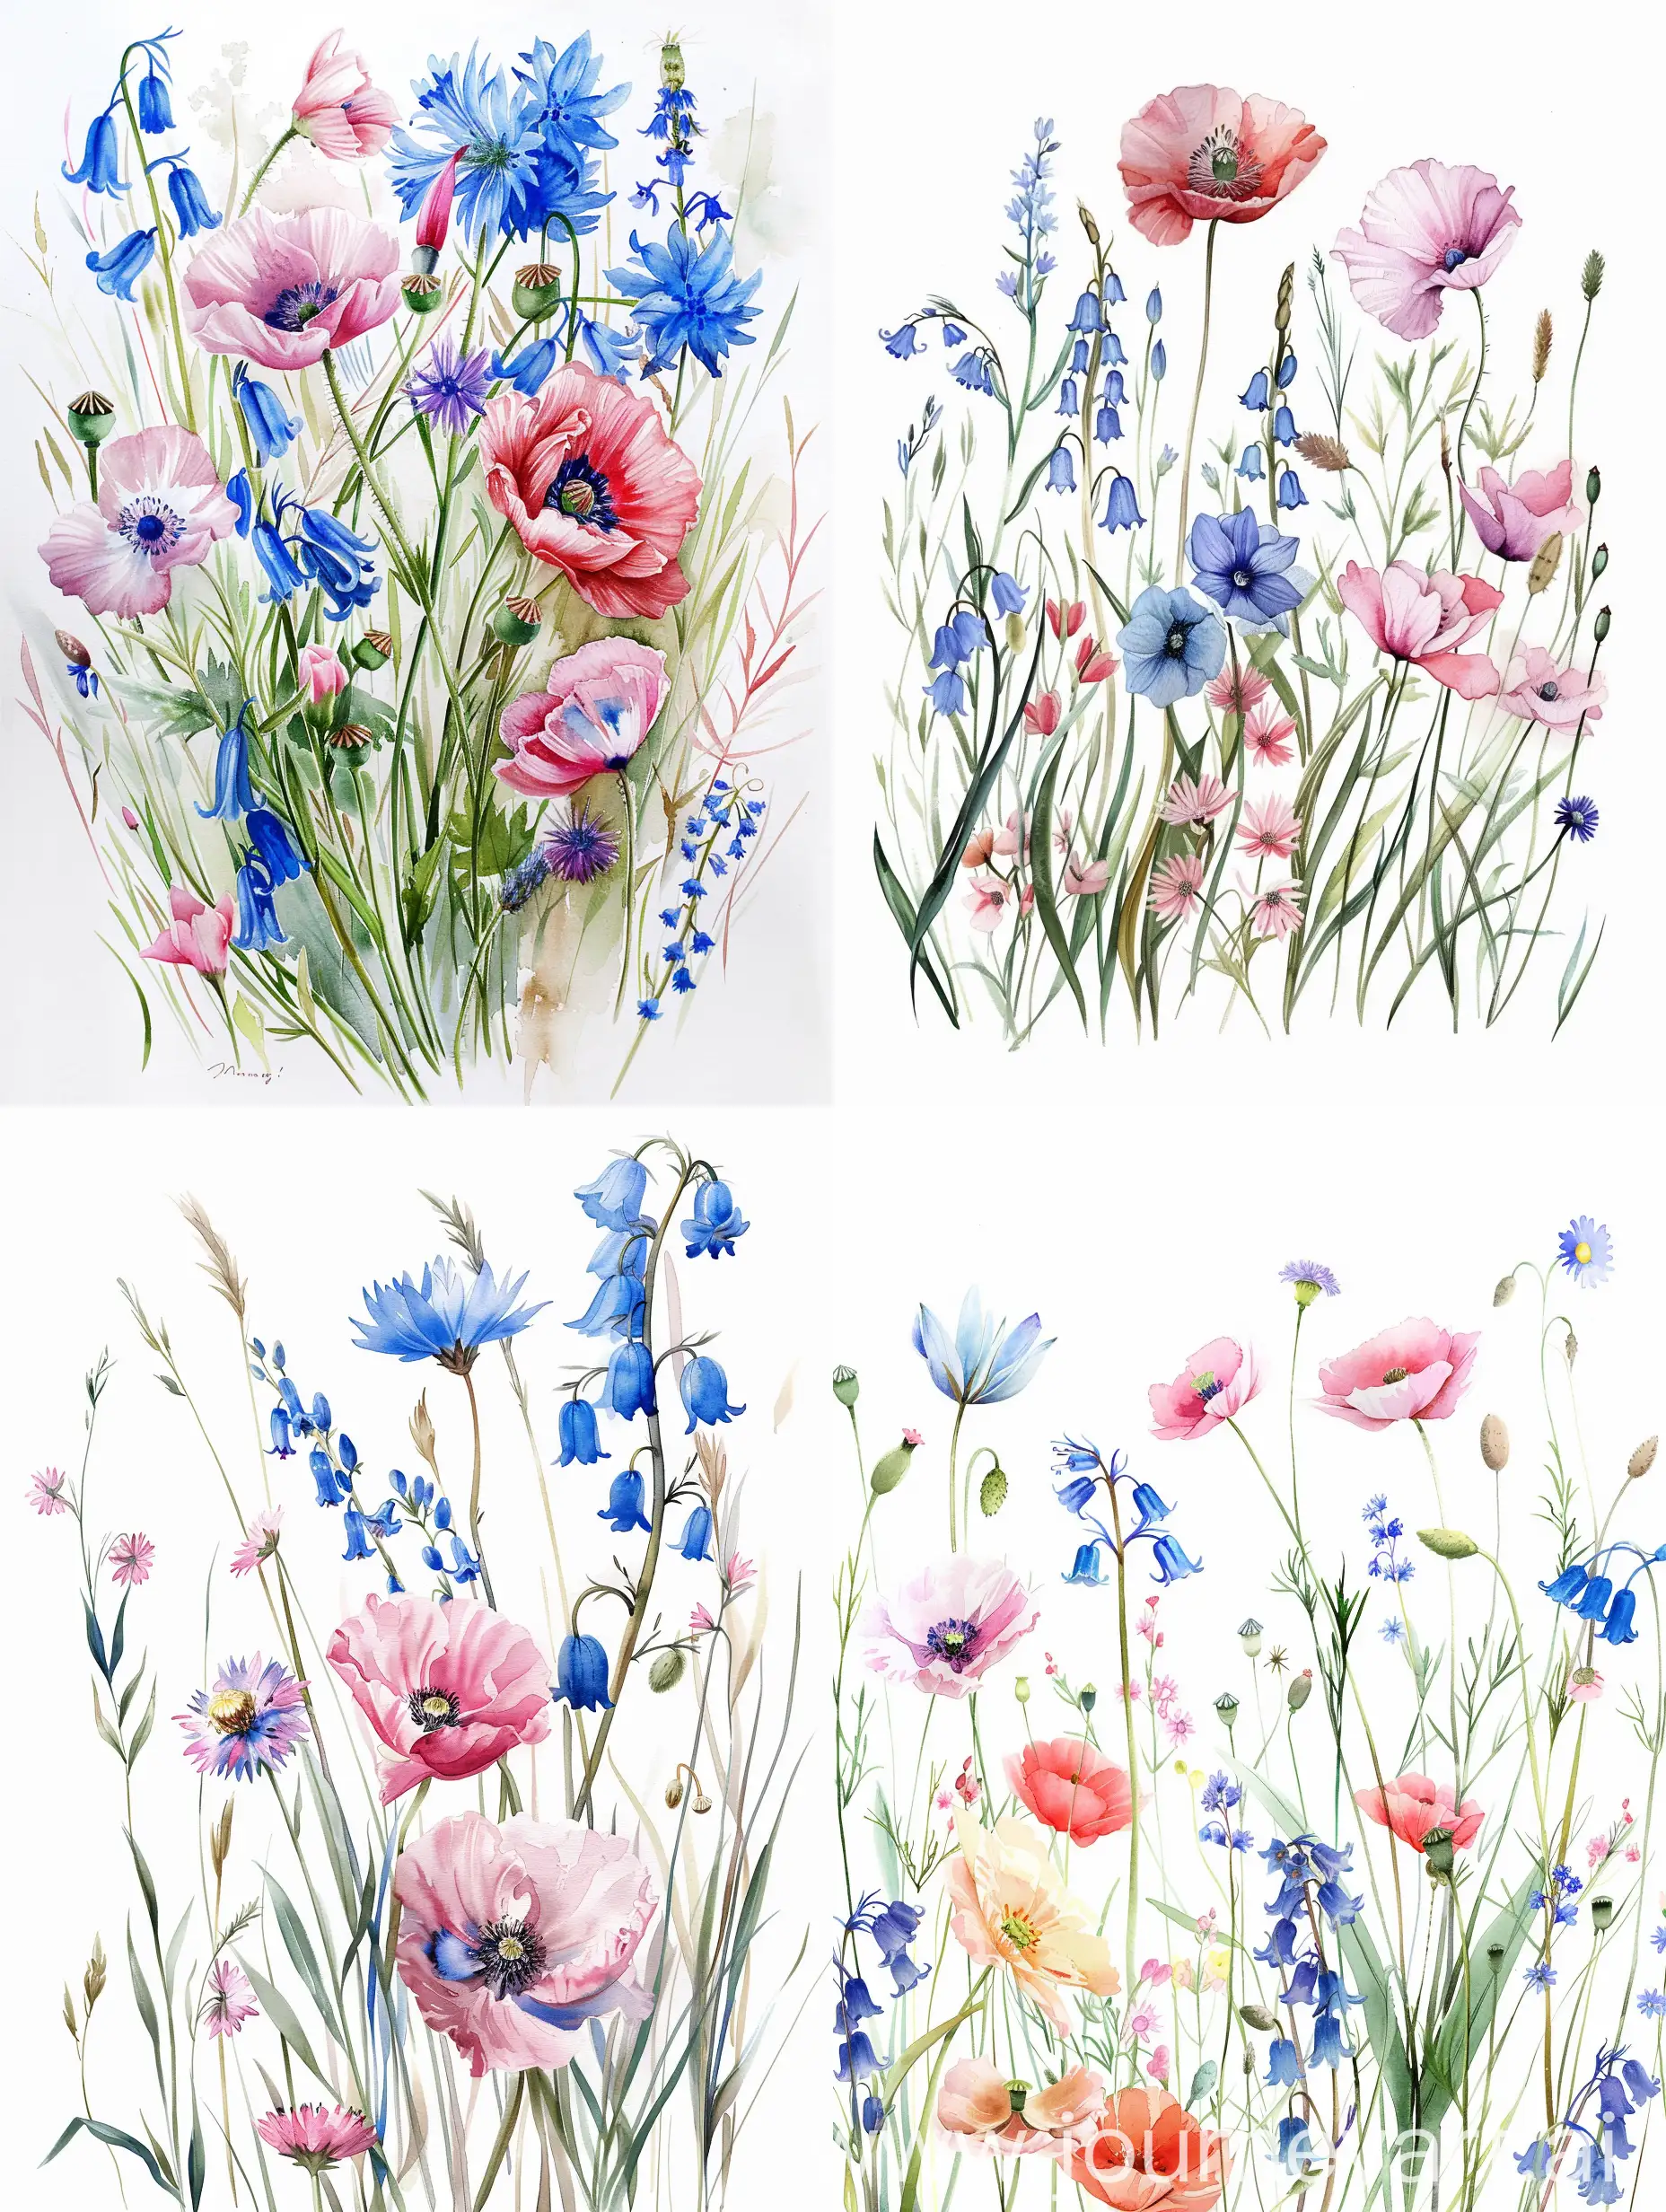 Elegant-HandPainted-Watercolor-of-Wildflowers-on-White-Background